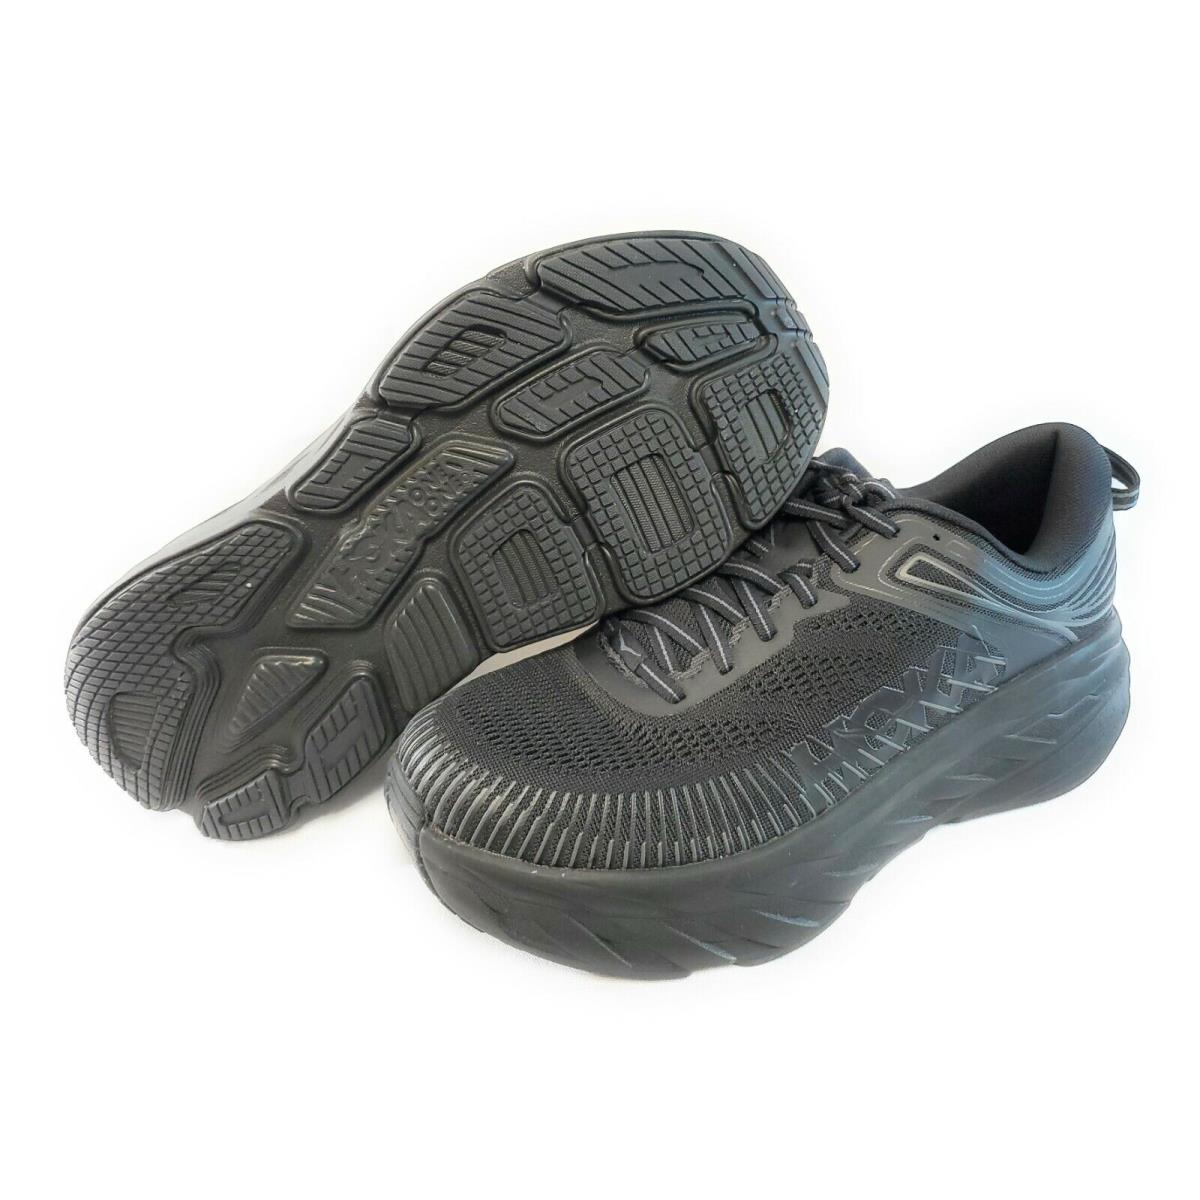 Womens Hoka One One Bondi 7 Wide 1110531 Bblc Black Running Sneakers Shoes - Black